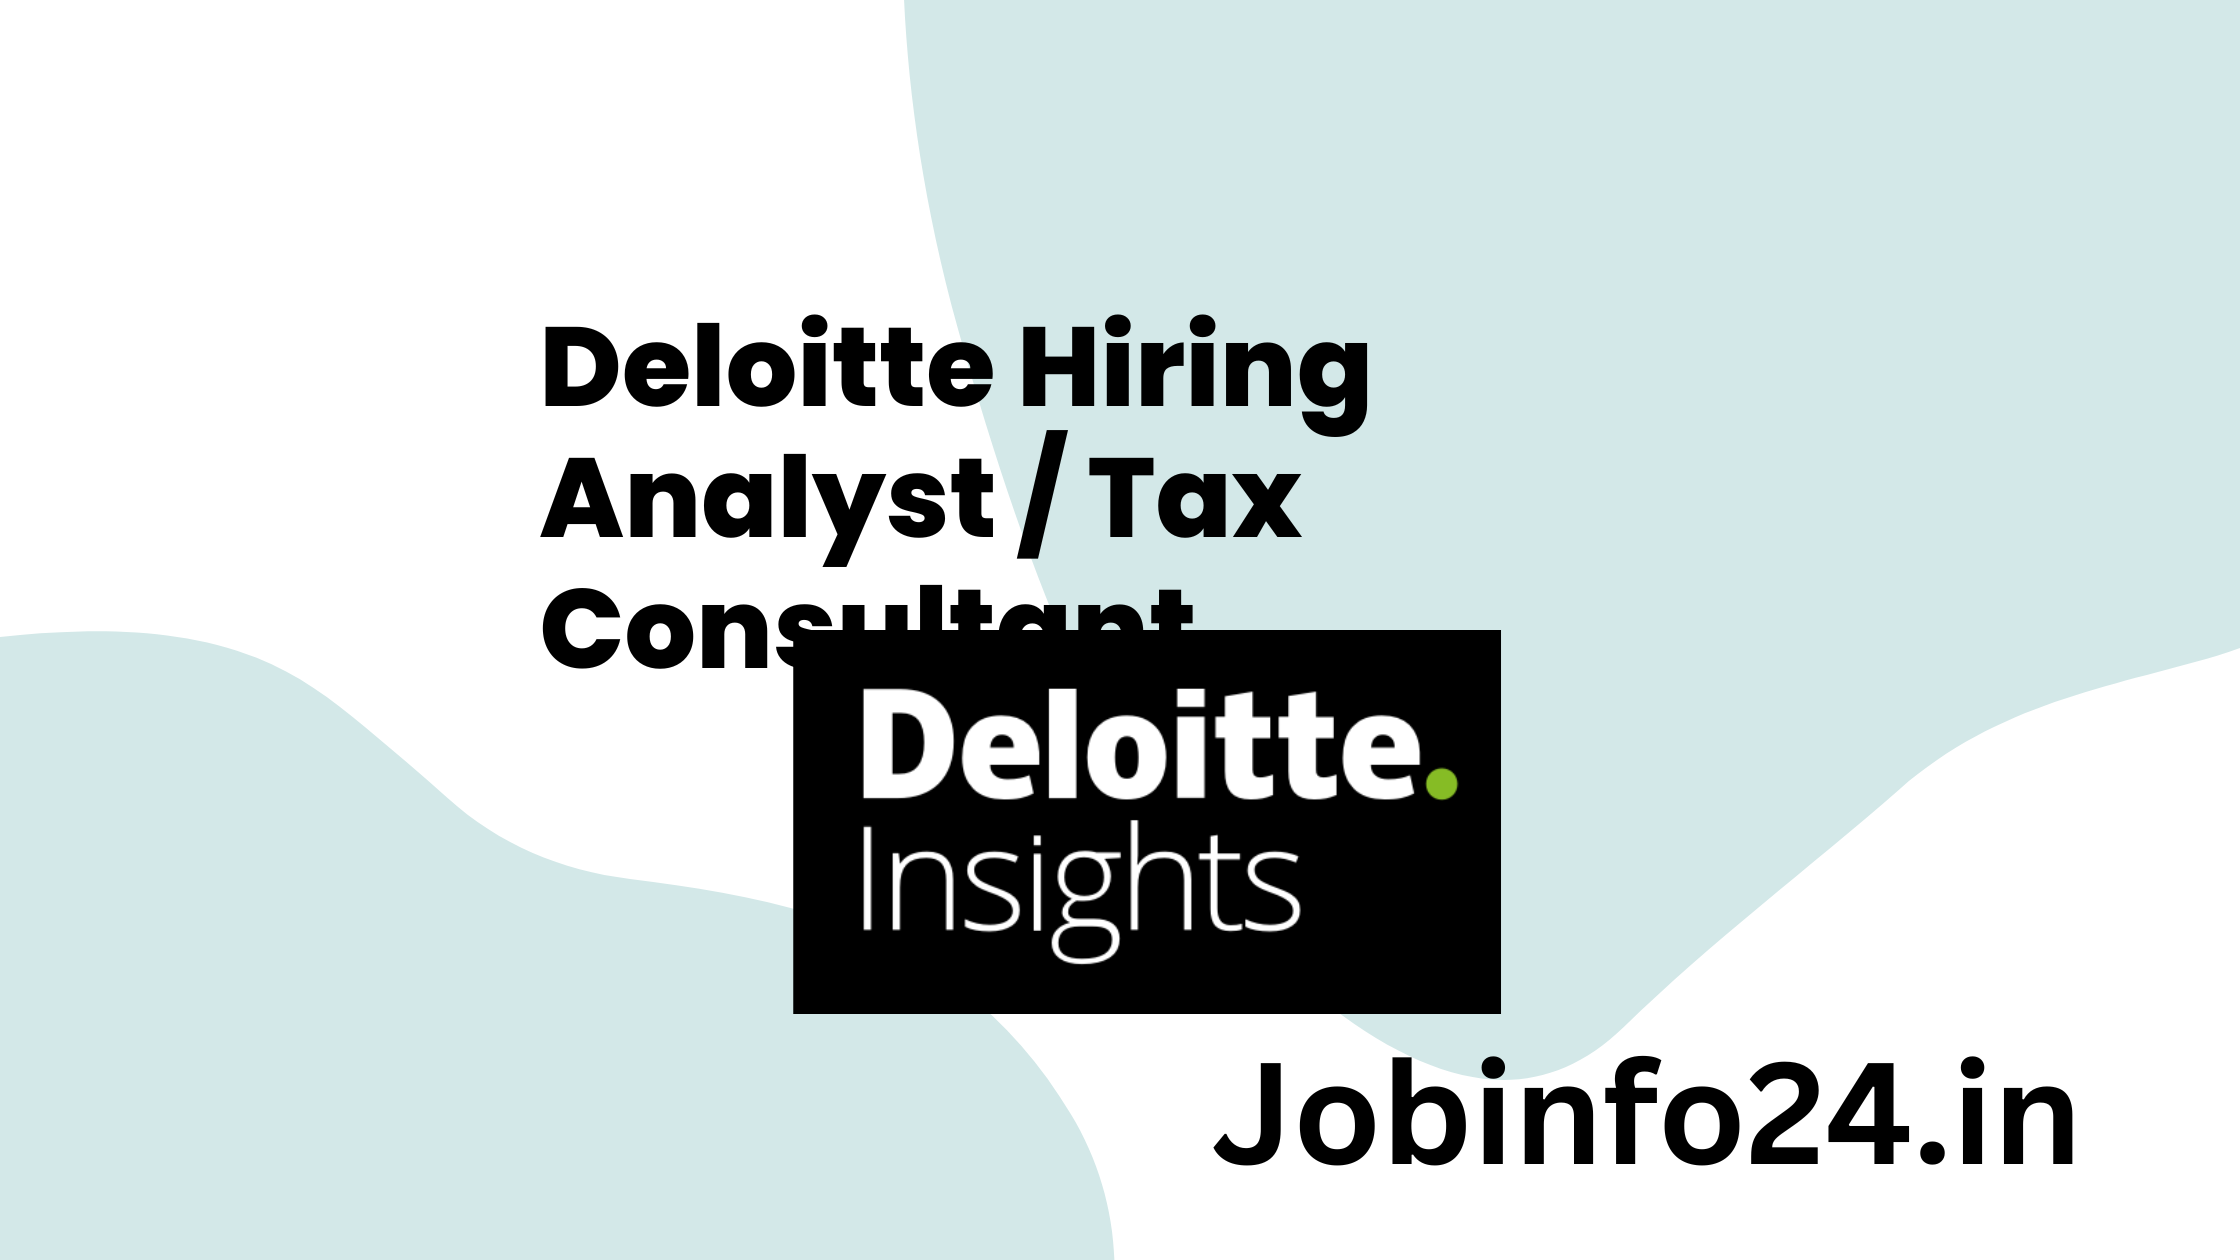 Deloitte Hiring Analyst / Tax Consultant